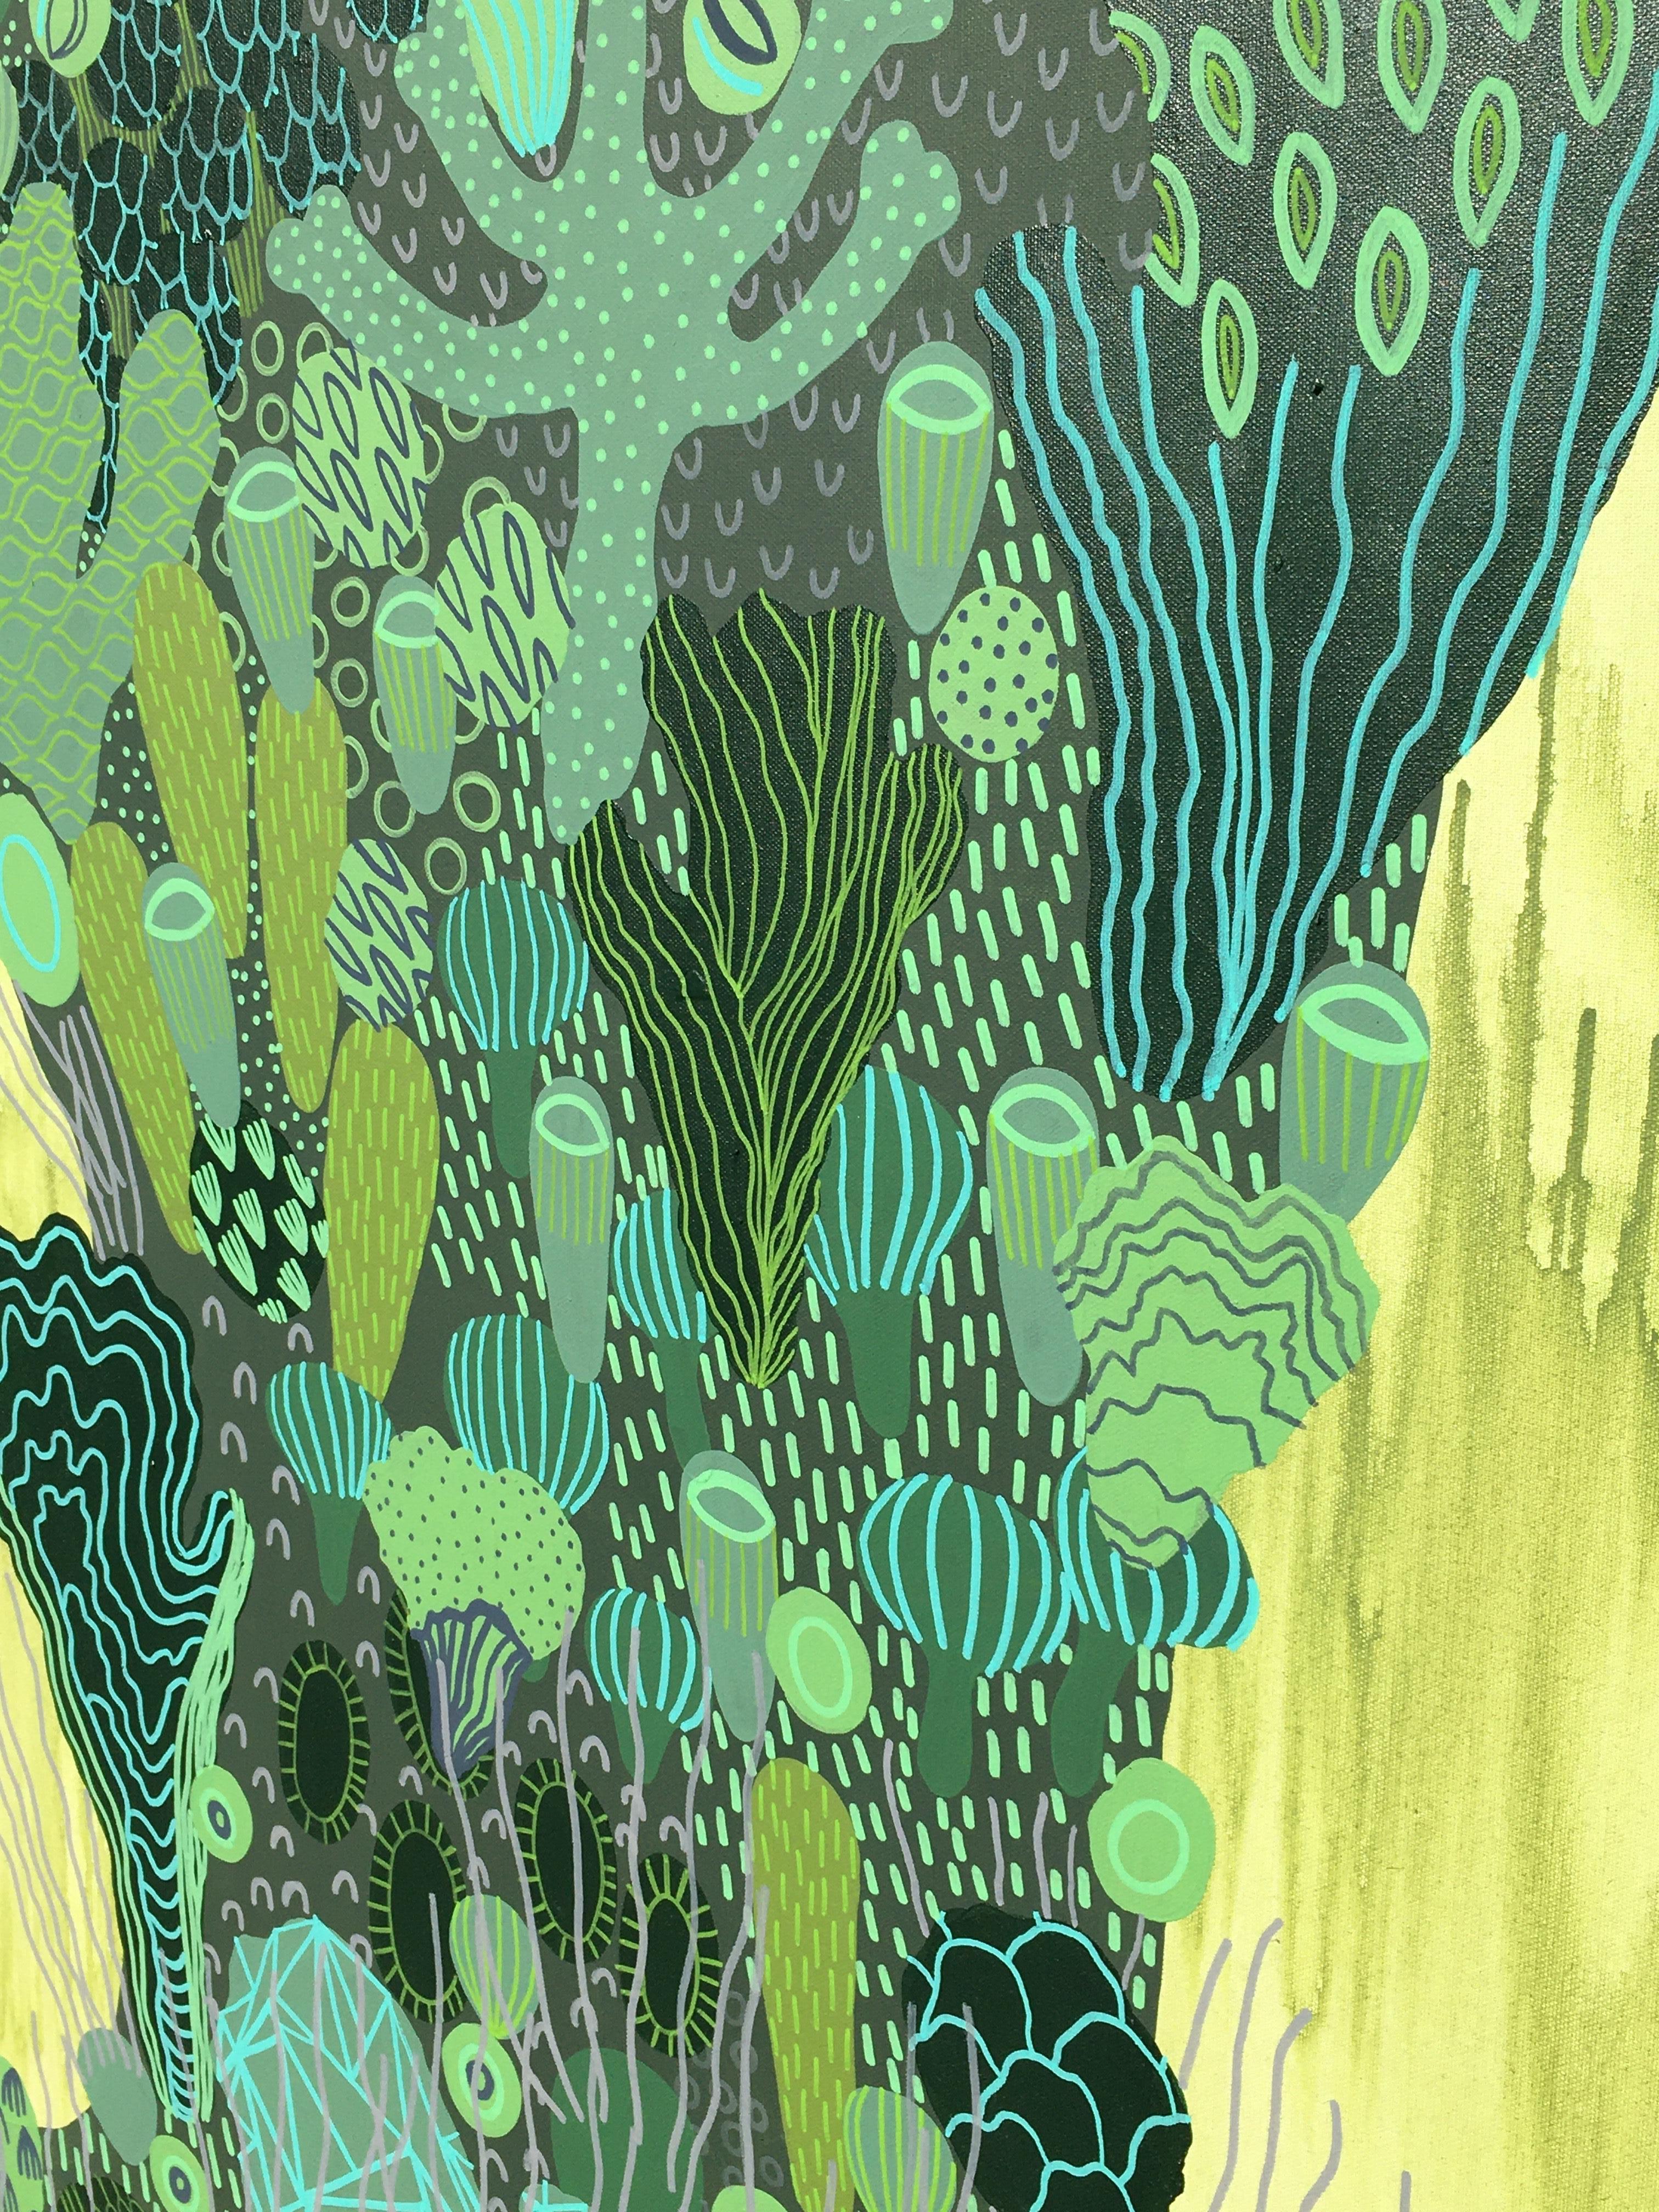 THALASSO 6 - Peinture figurative abstraite verte sur toile, Biomorphique marine  - Painting de Chloe York